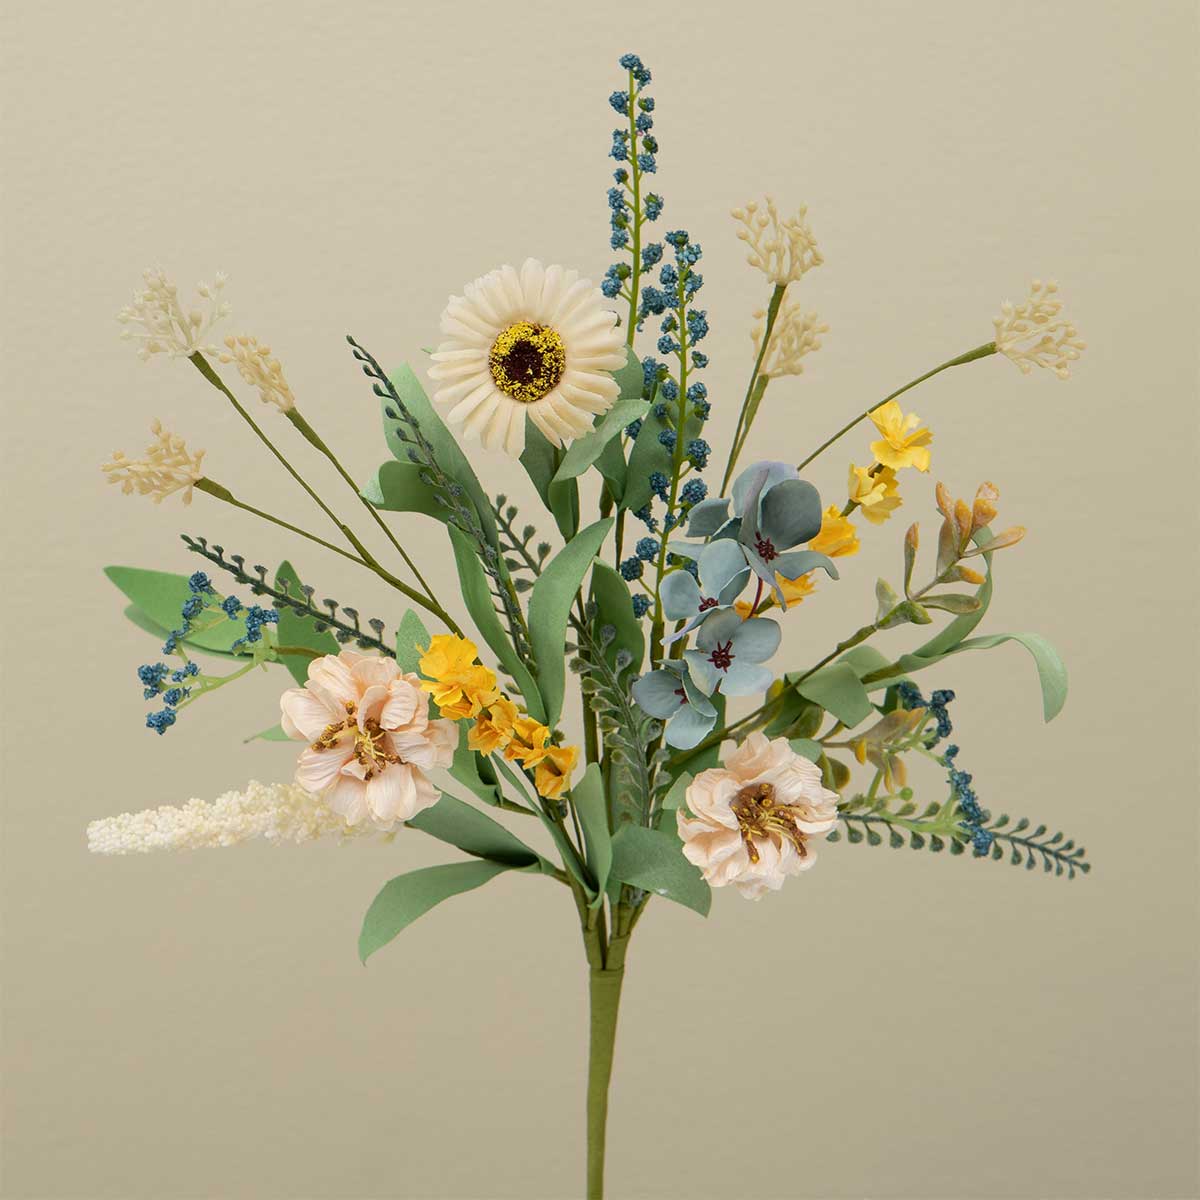 Gatherings Floral Bush/Pik 10"x15" Mixed Daisy/Cosmos/Hydrangea